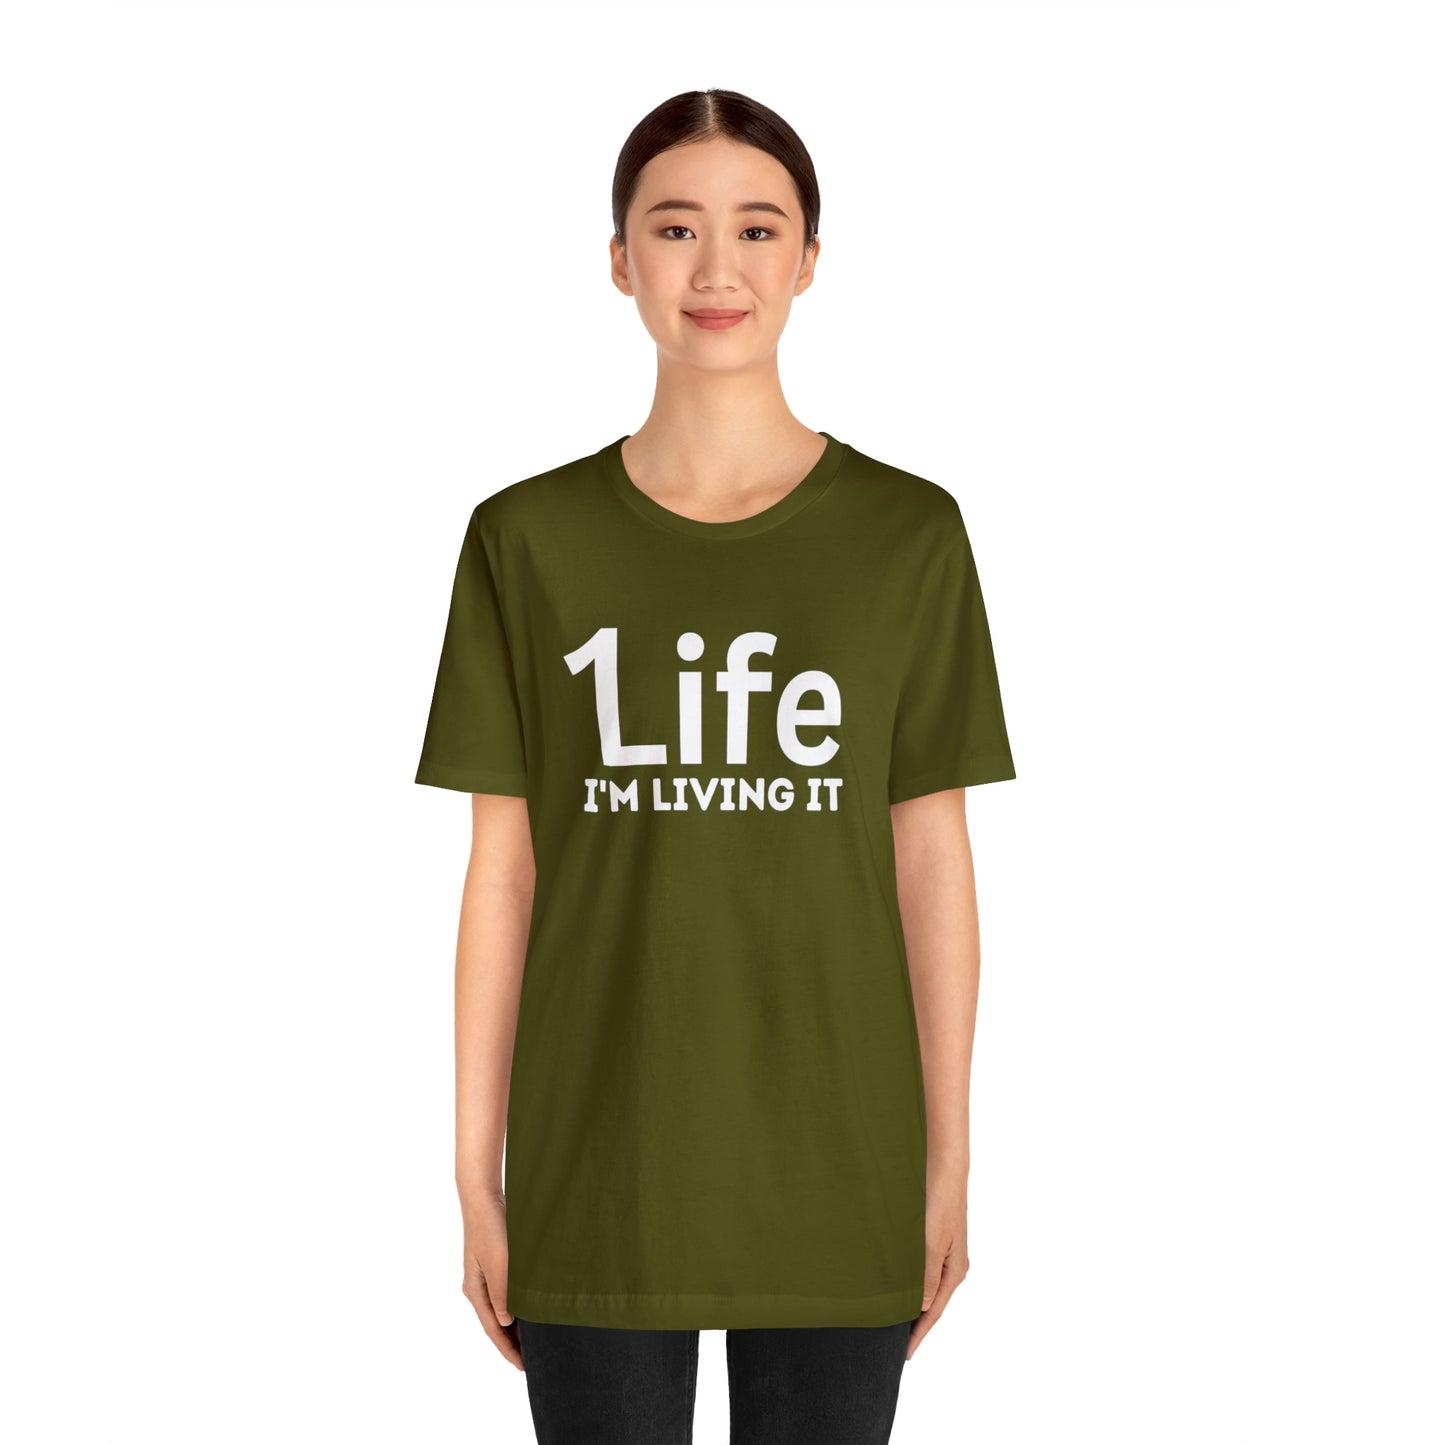 One Life I'M Living It Shirt One life Shirt 1life shirt Live Your Life You Only Have One Life To Live Shirt